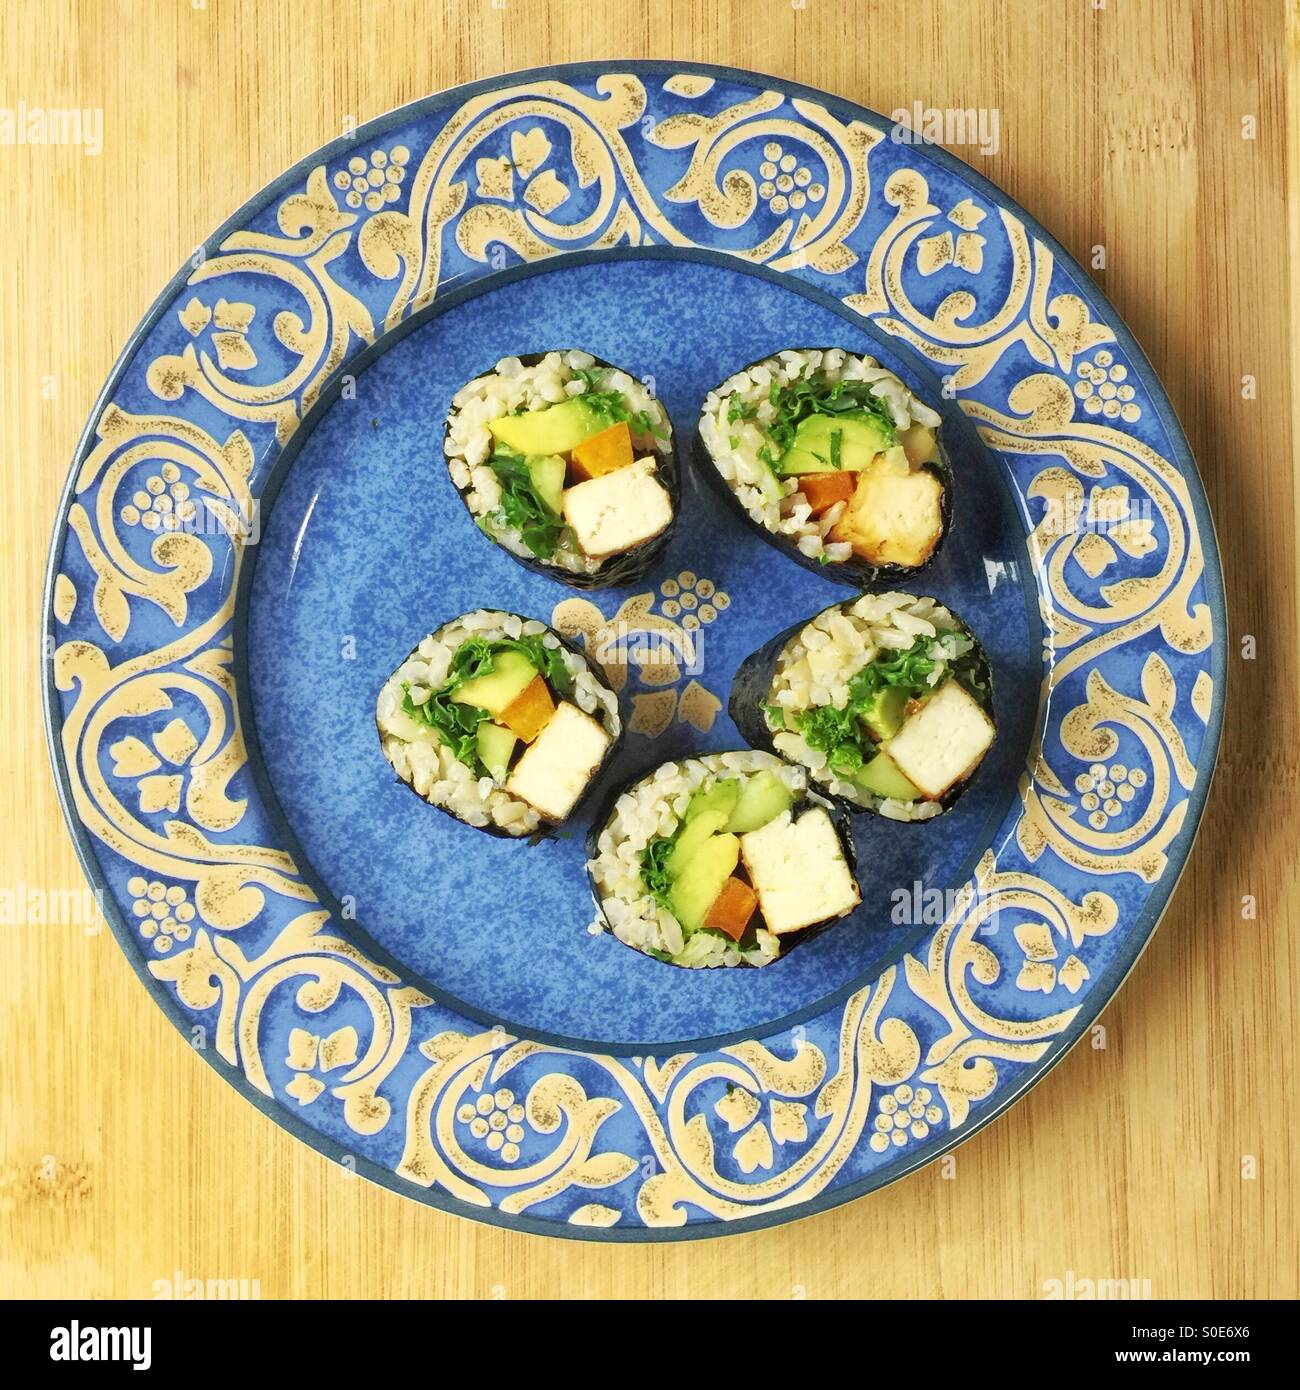 five tofu nori rolls on blue plate Stock Photo